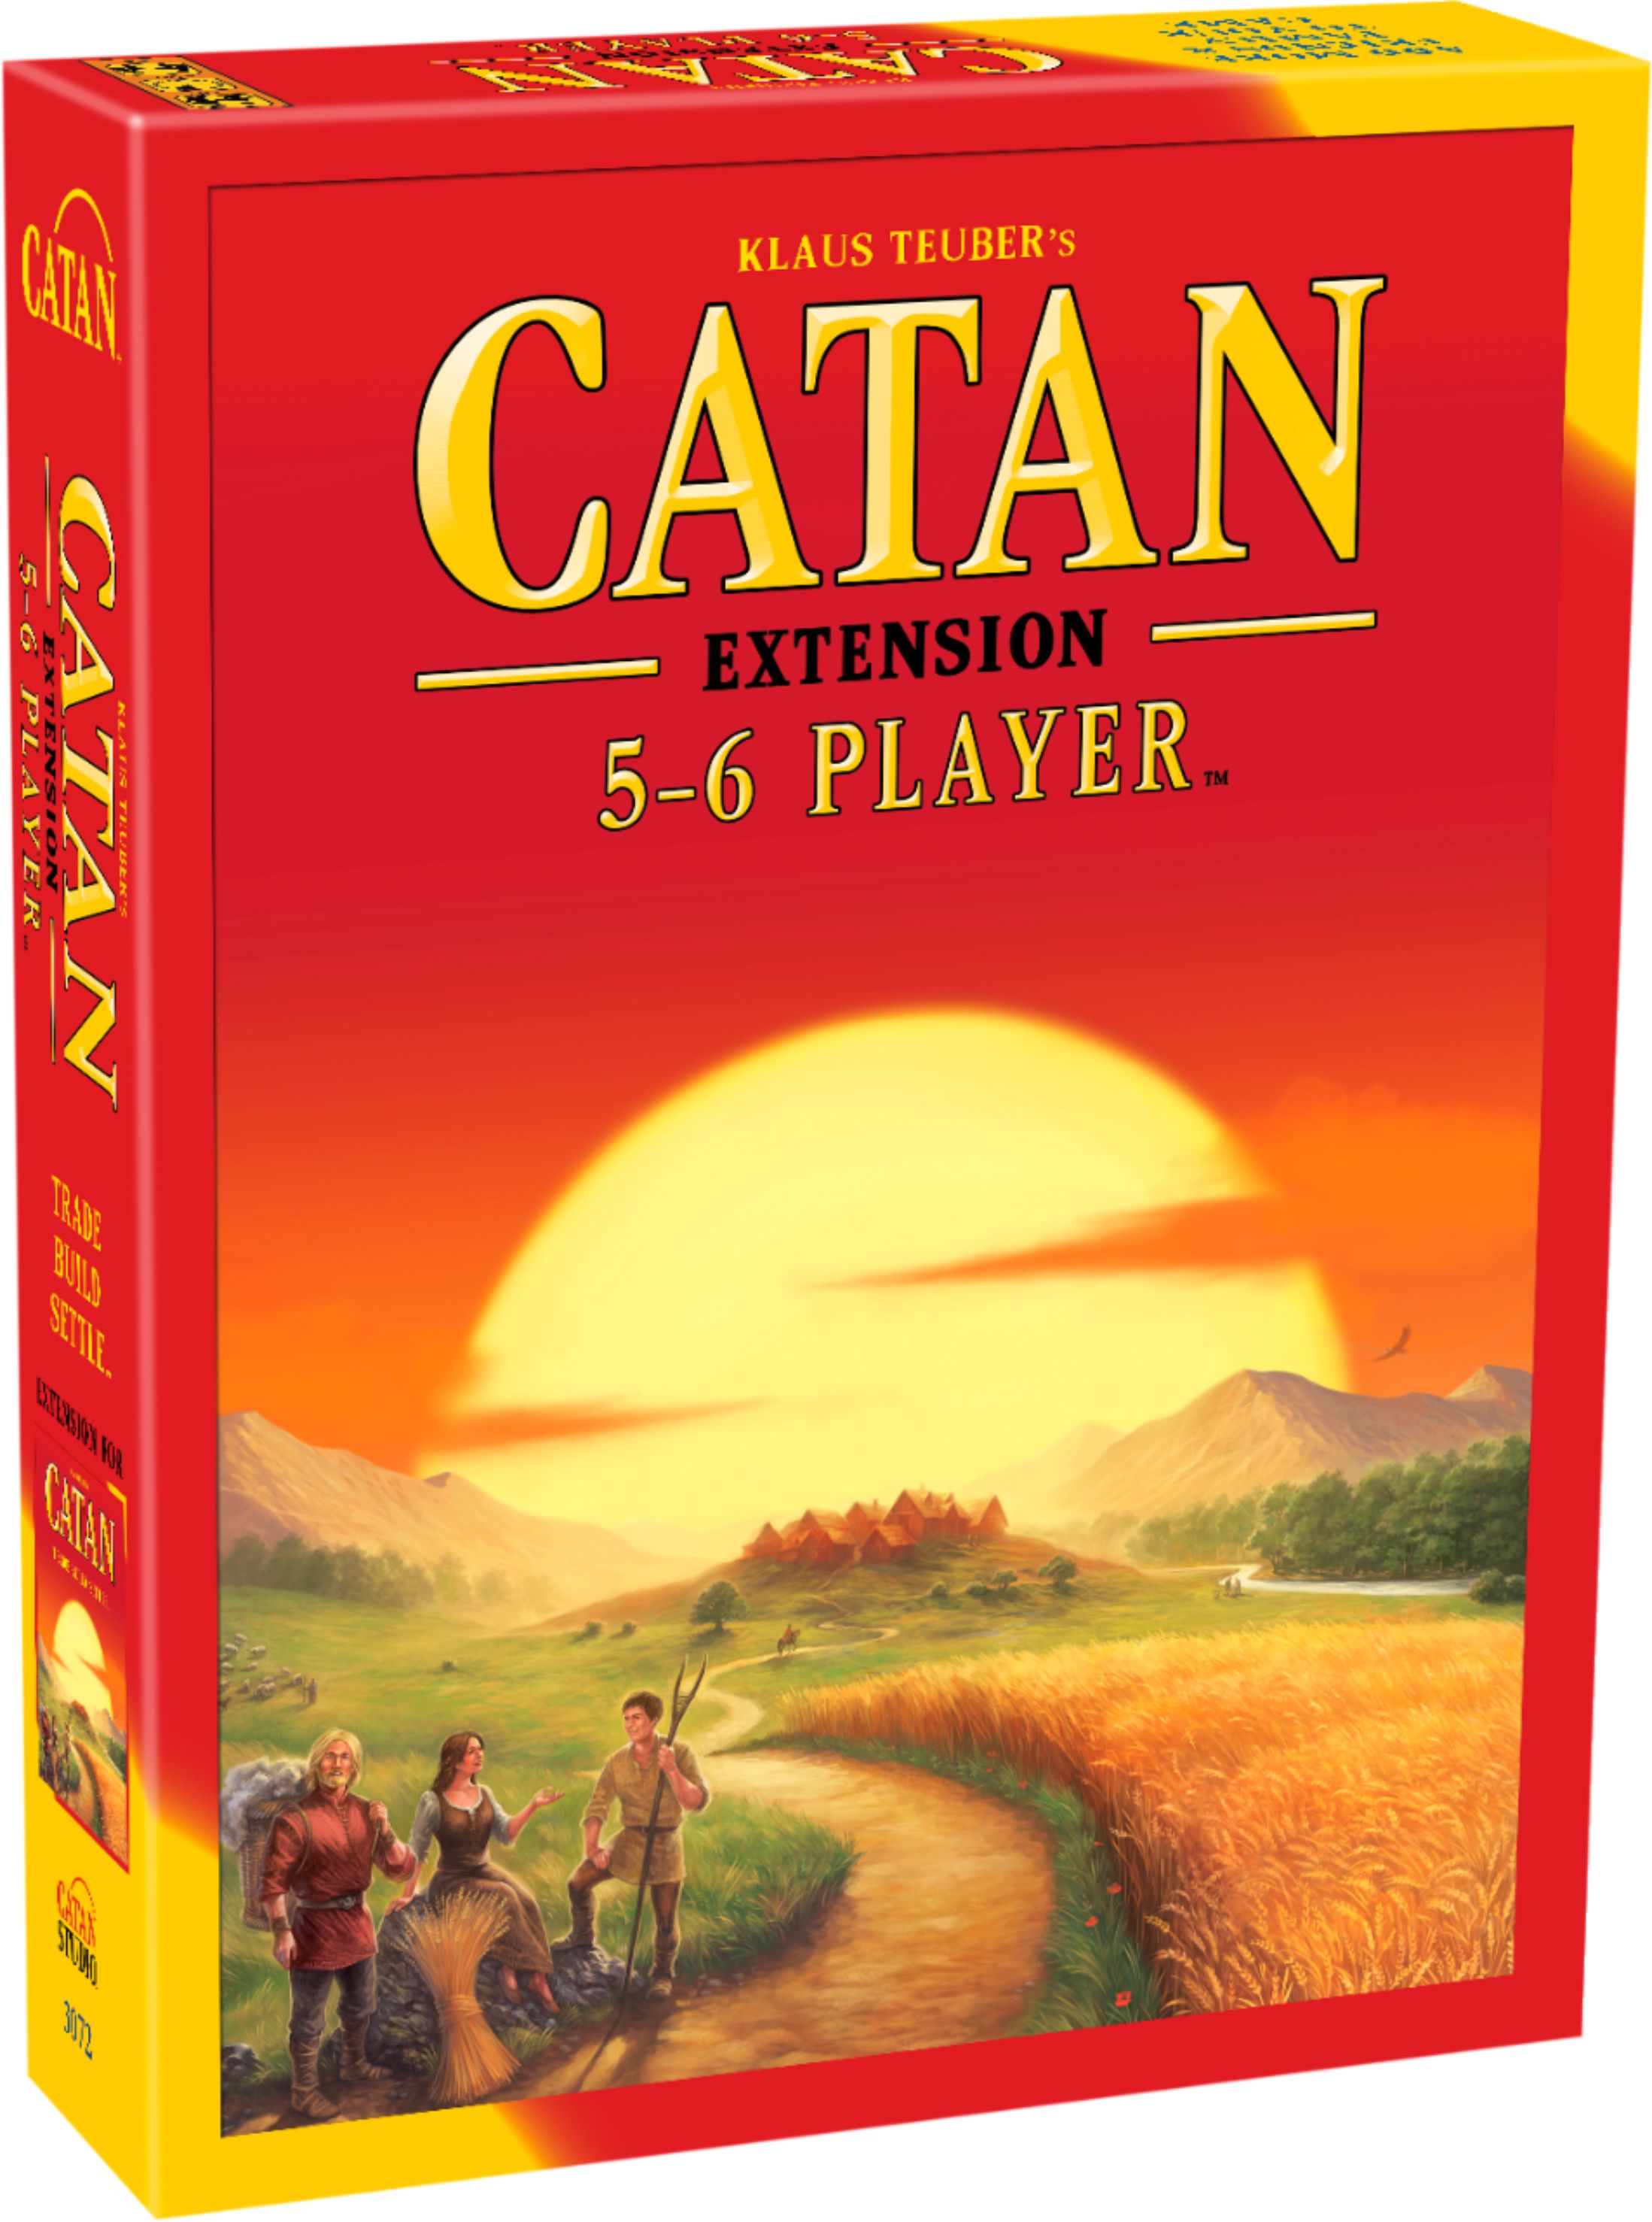 Catan Studio - Catan 5-6 Player Extension Strategy Board Game